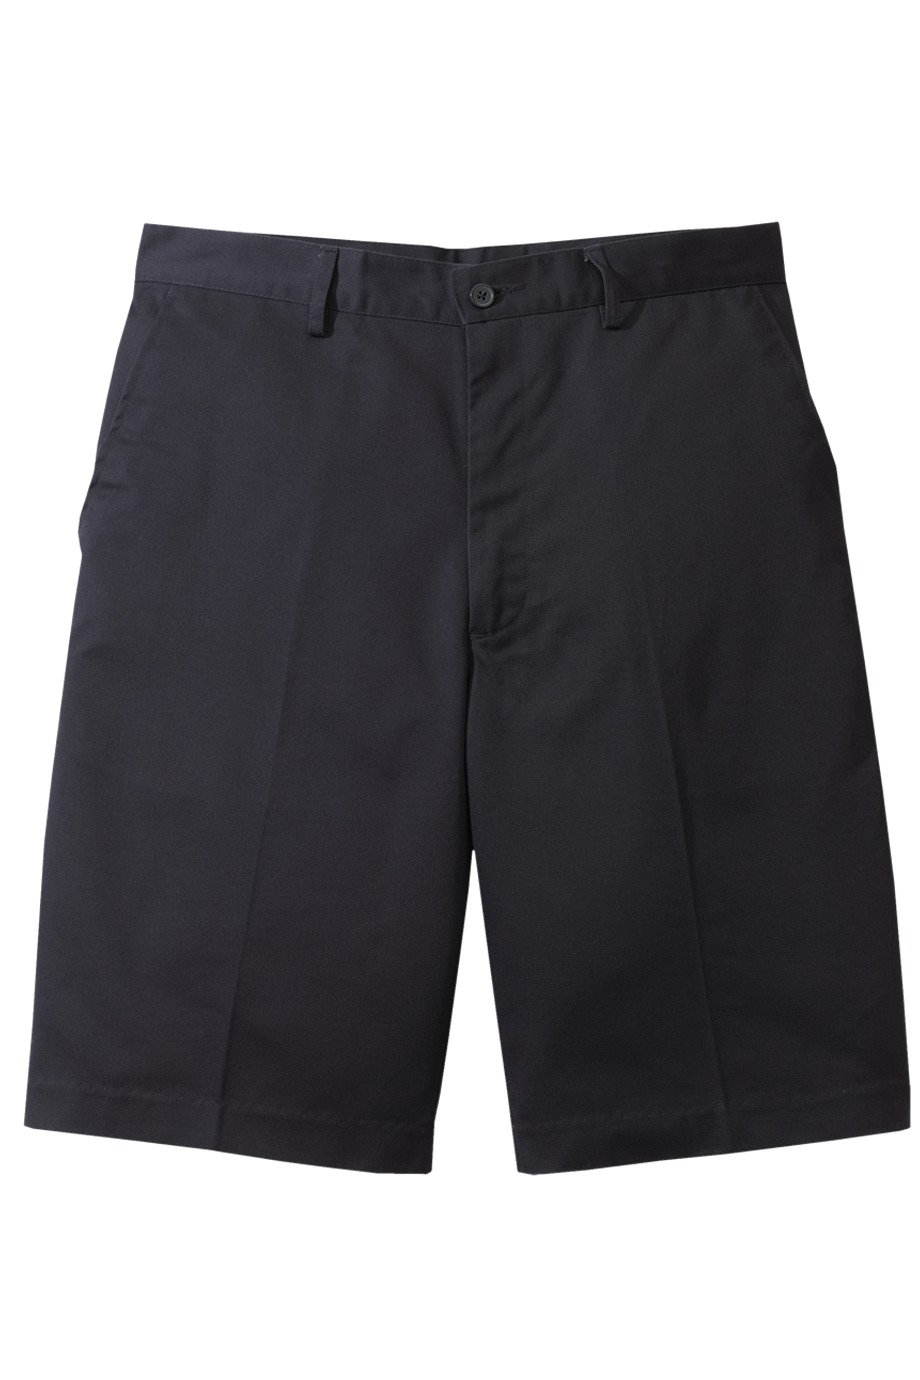 Edwards Garment 2487 - Men's Flat Front Chino Short